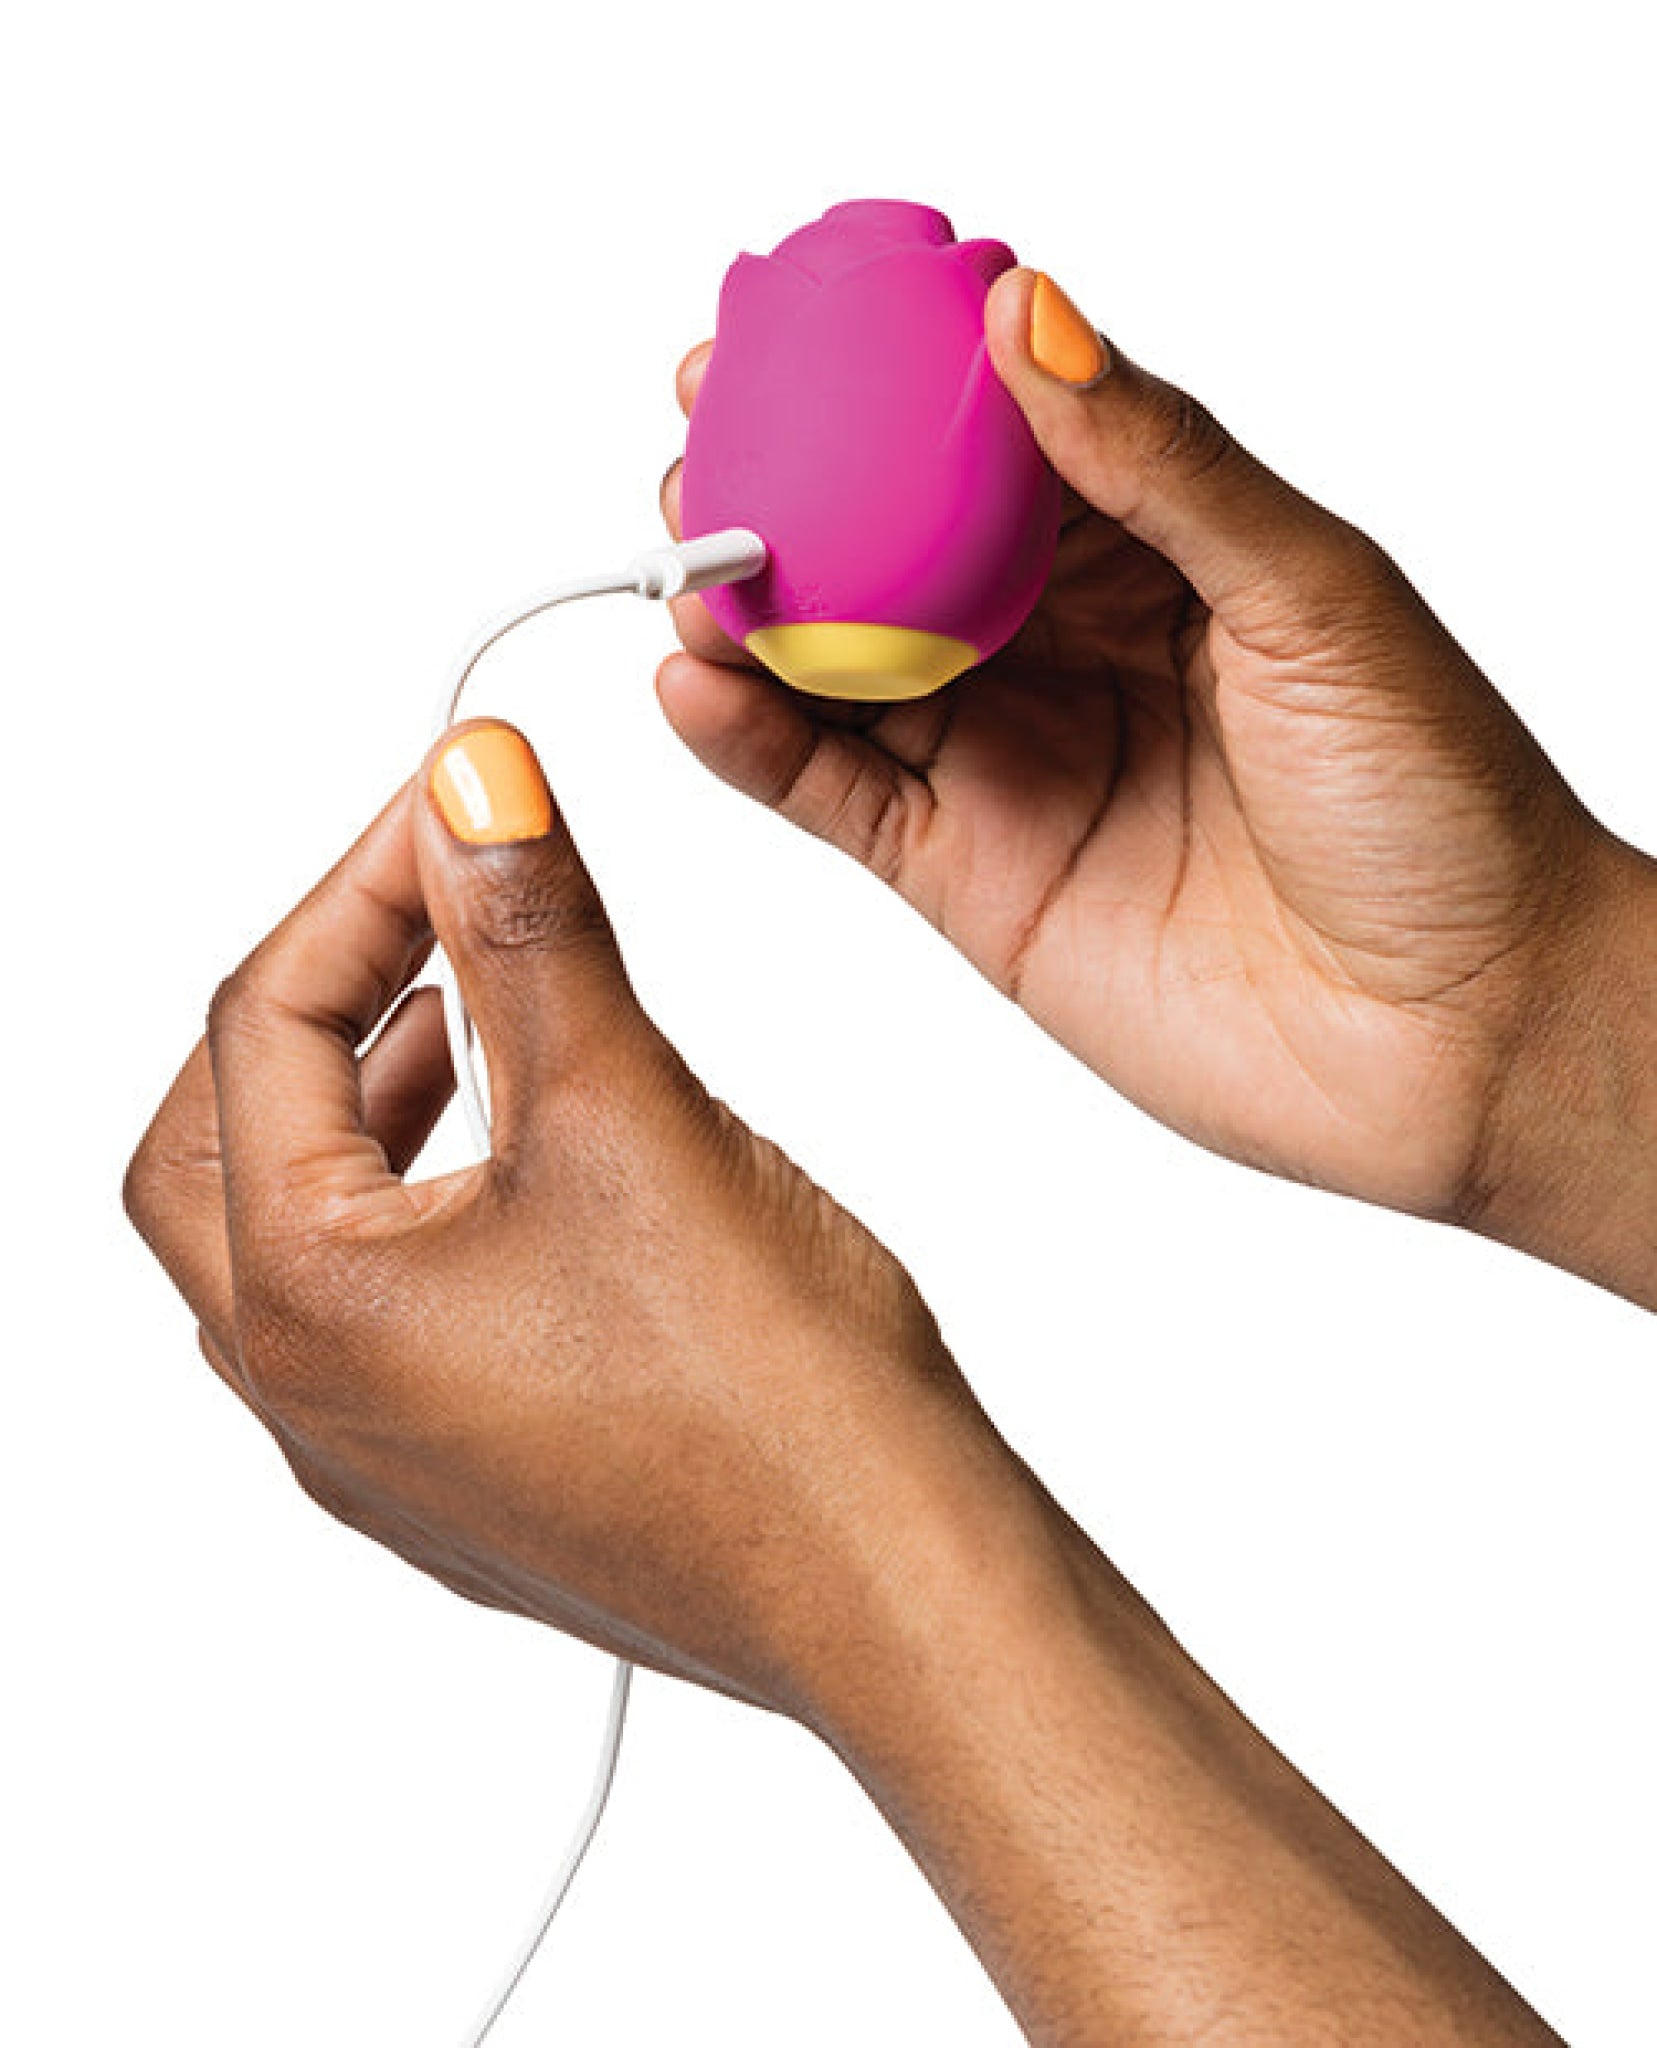 Romp Rose Clit Stimulator - Pink Romp